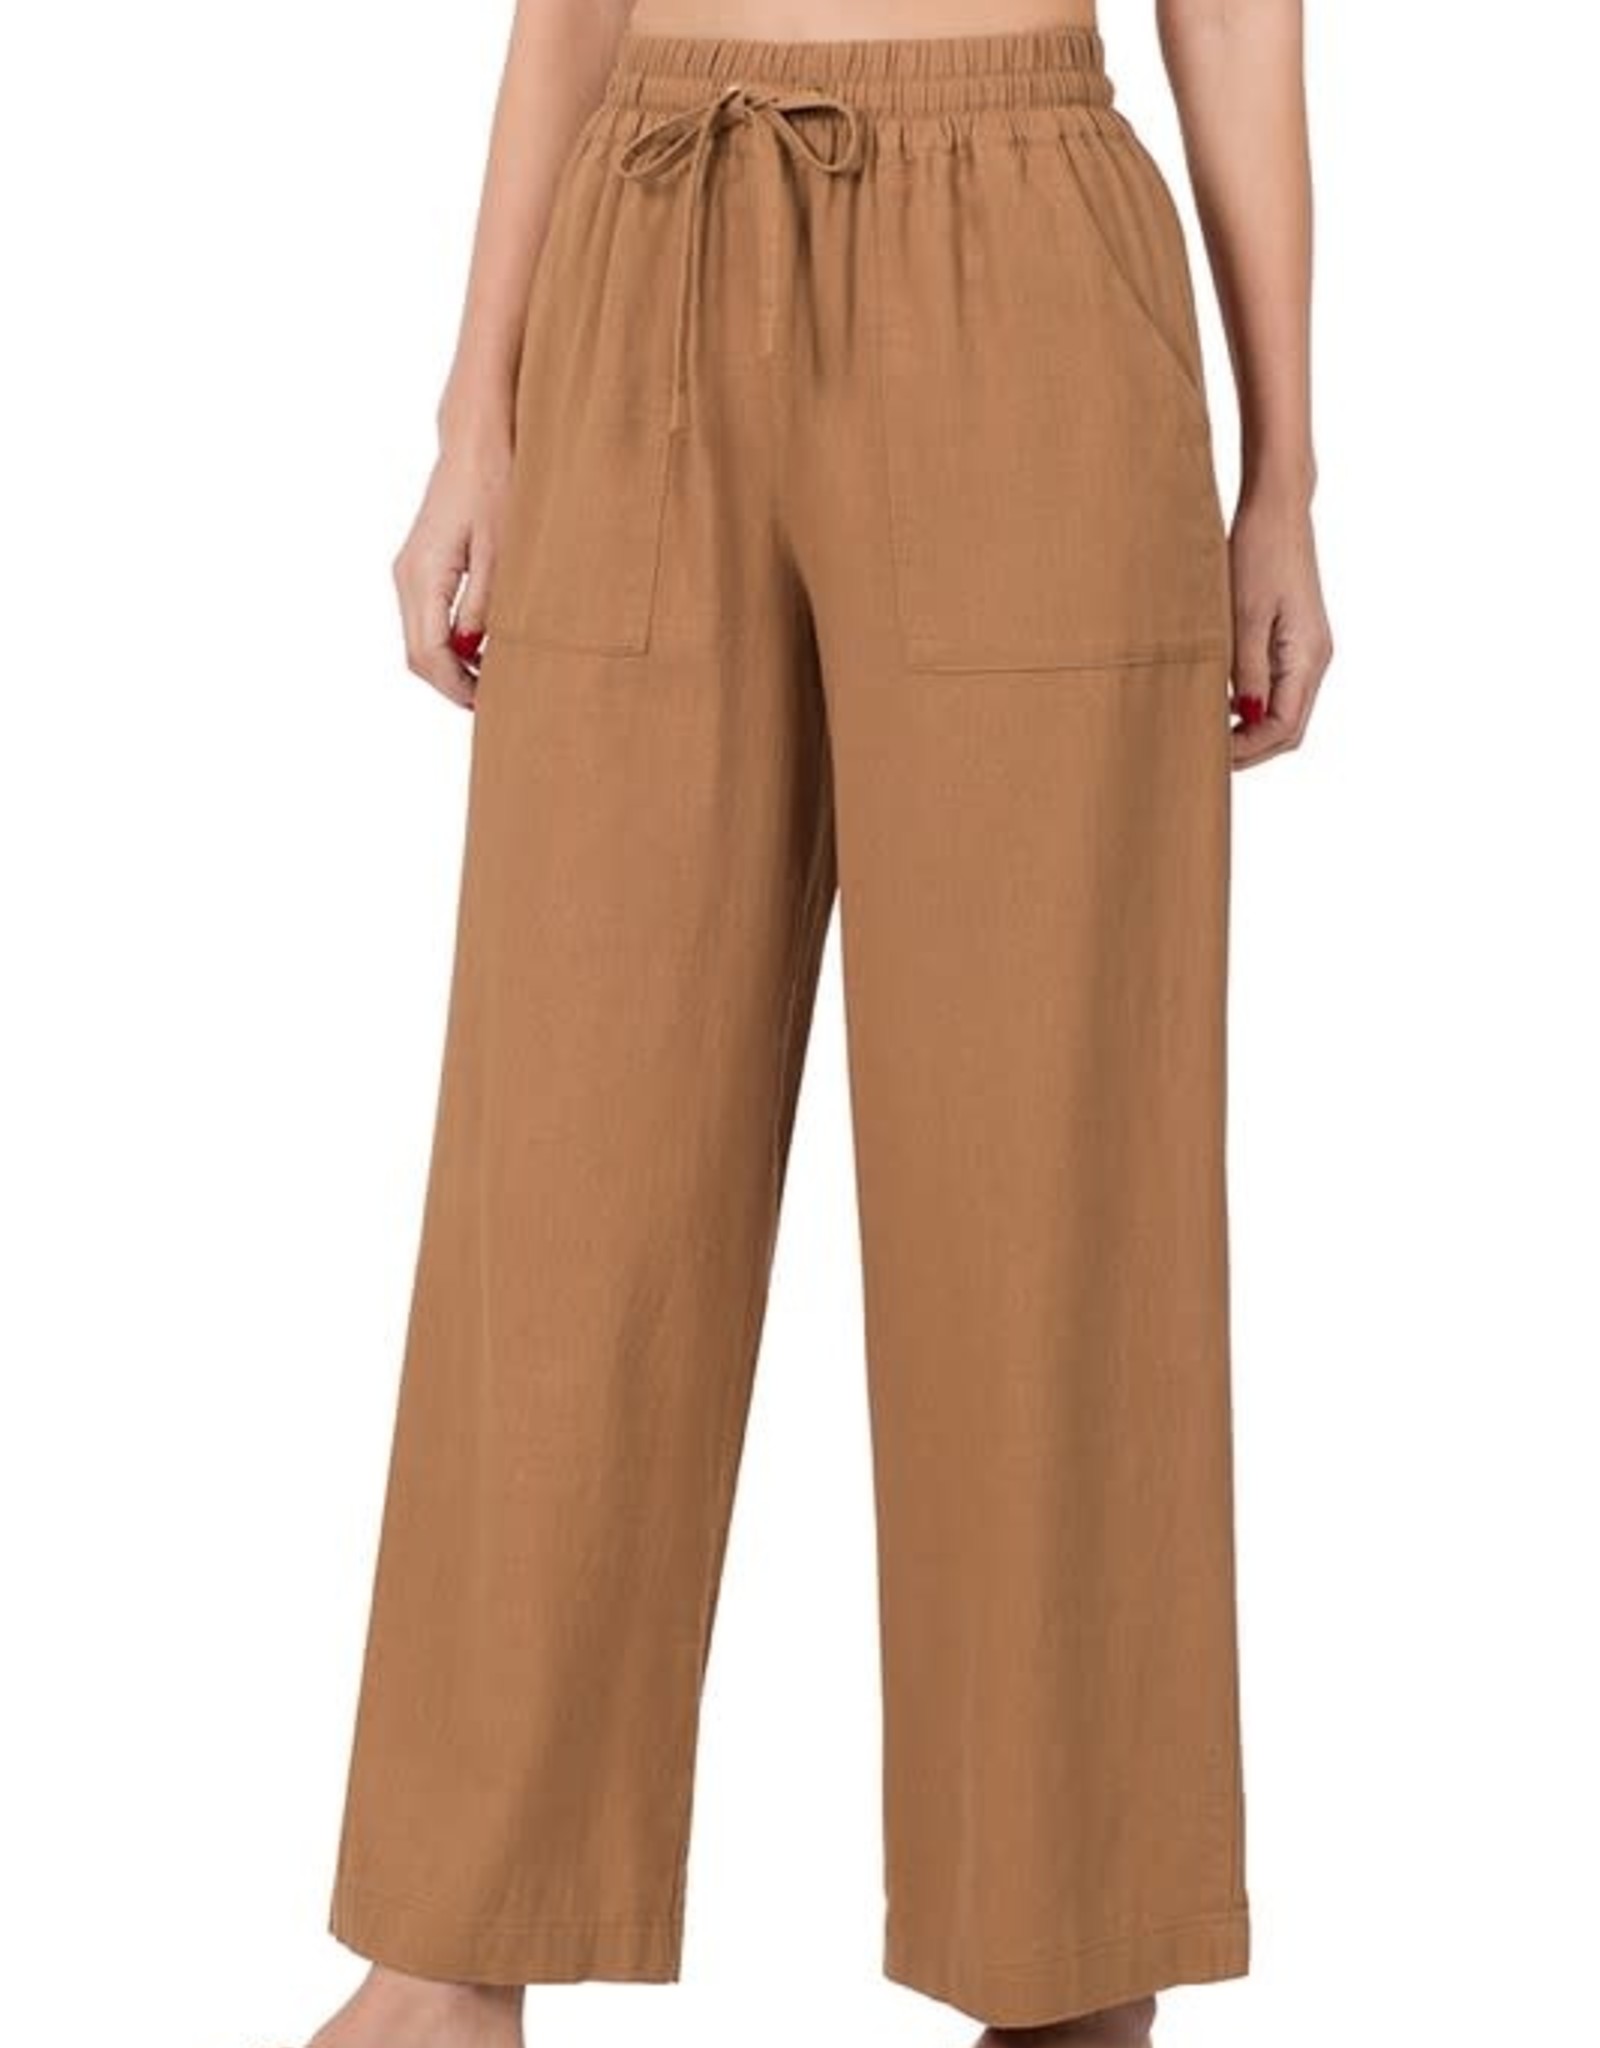 Zenana Linen Drawstring Waist Pants With Pockets - QP-65051